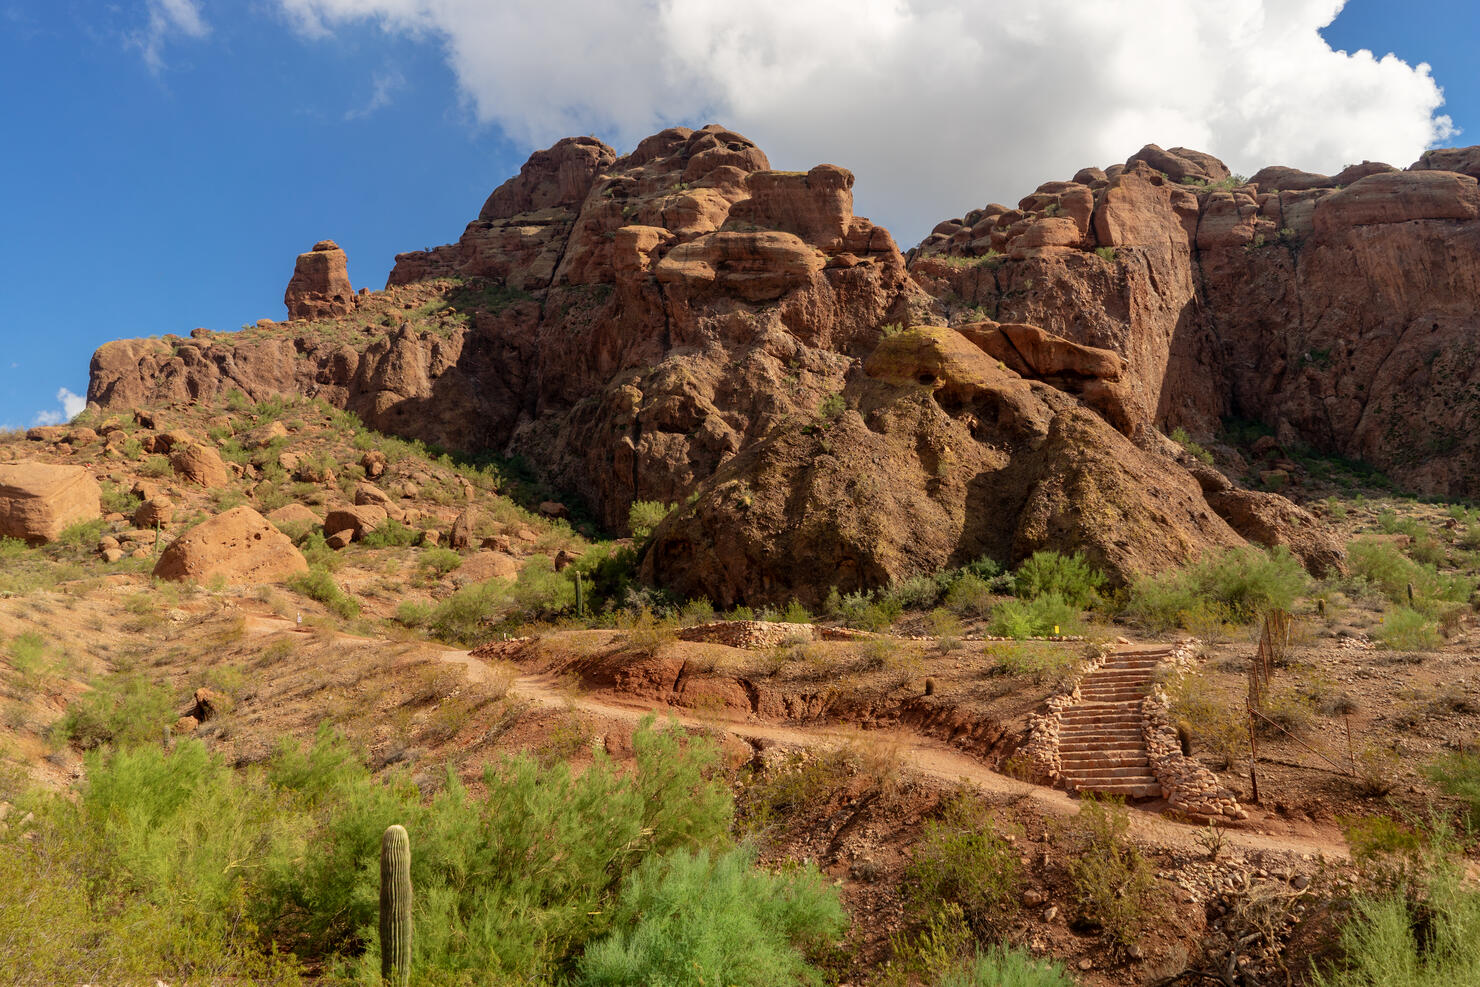 Camelback Mountain Echo Canyon recreation area trail in Phoenix, Arizona.